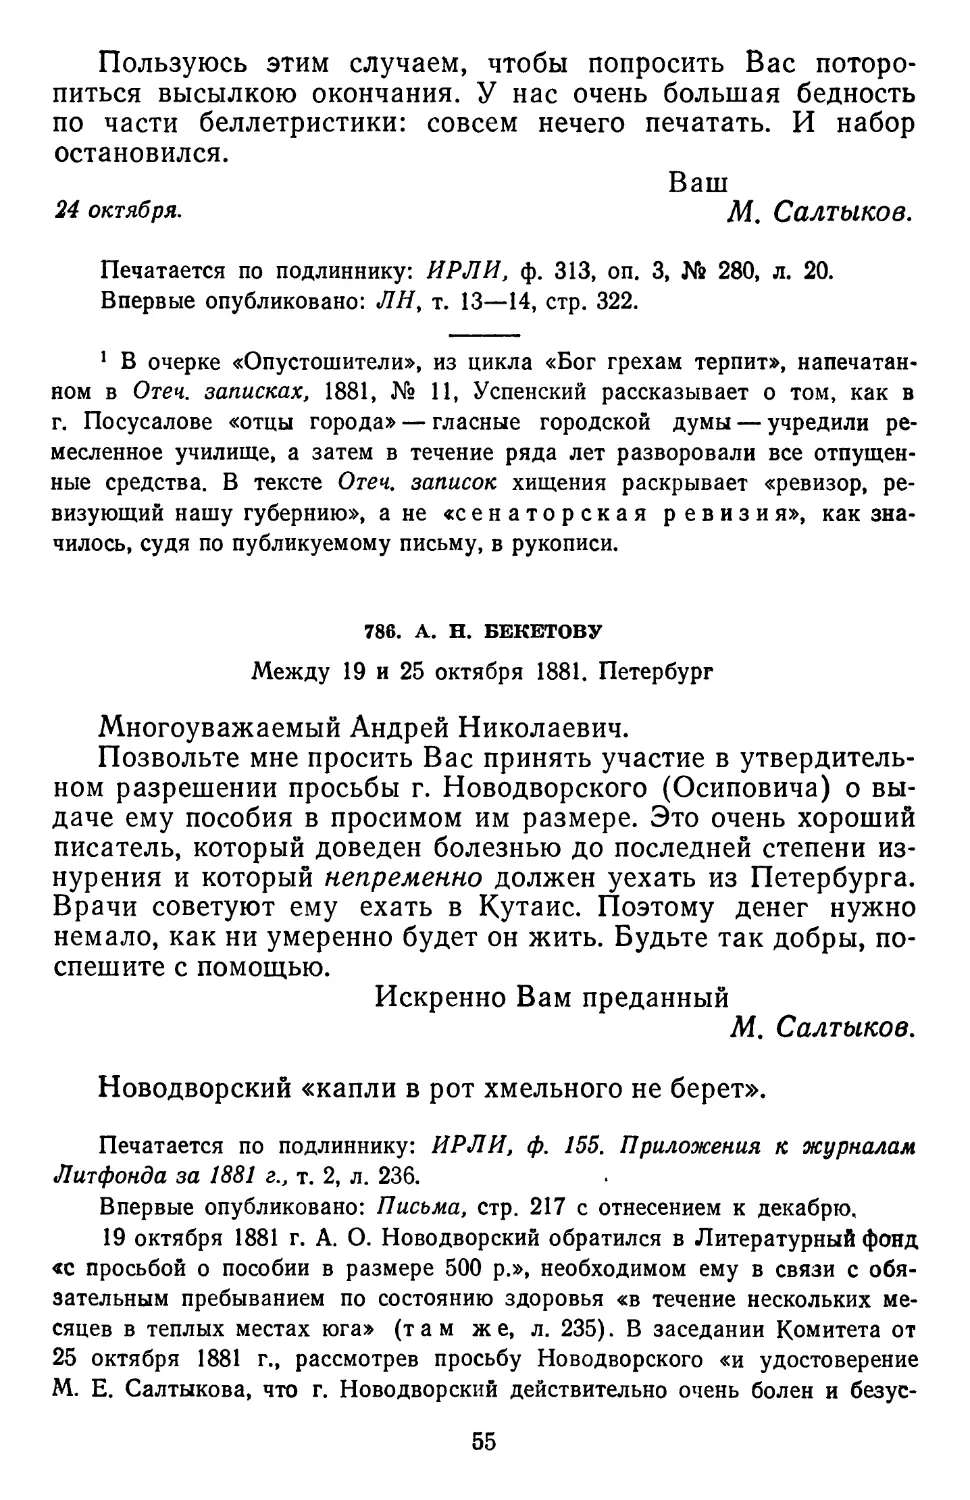 786.А. Н. Бекетову. Между 19 и 25 октября 1881. Петербург